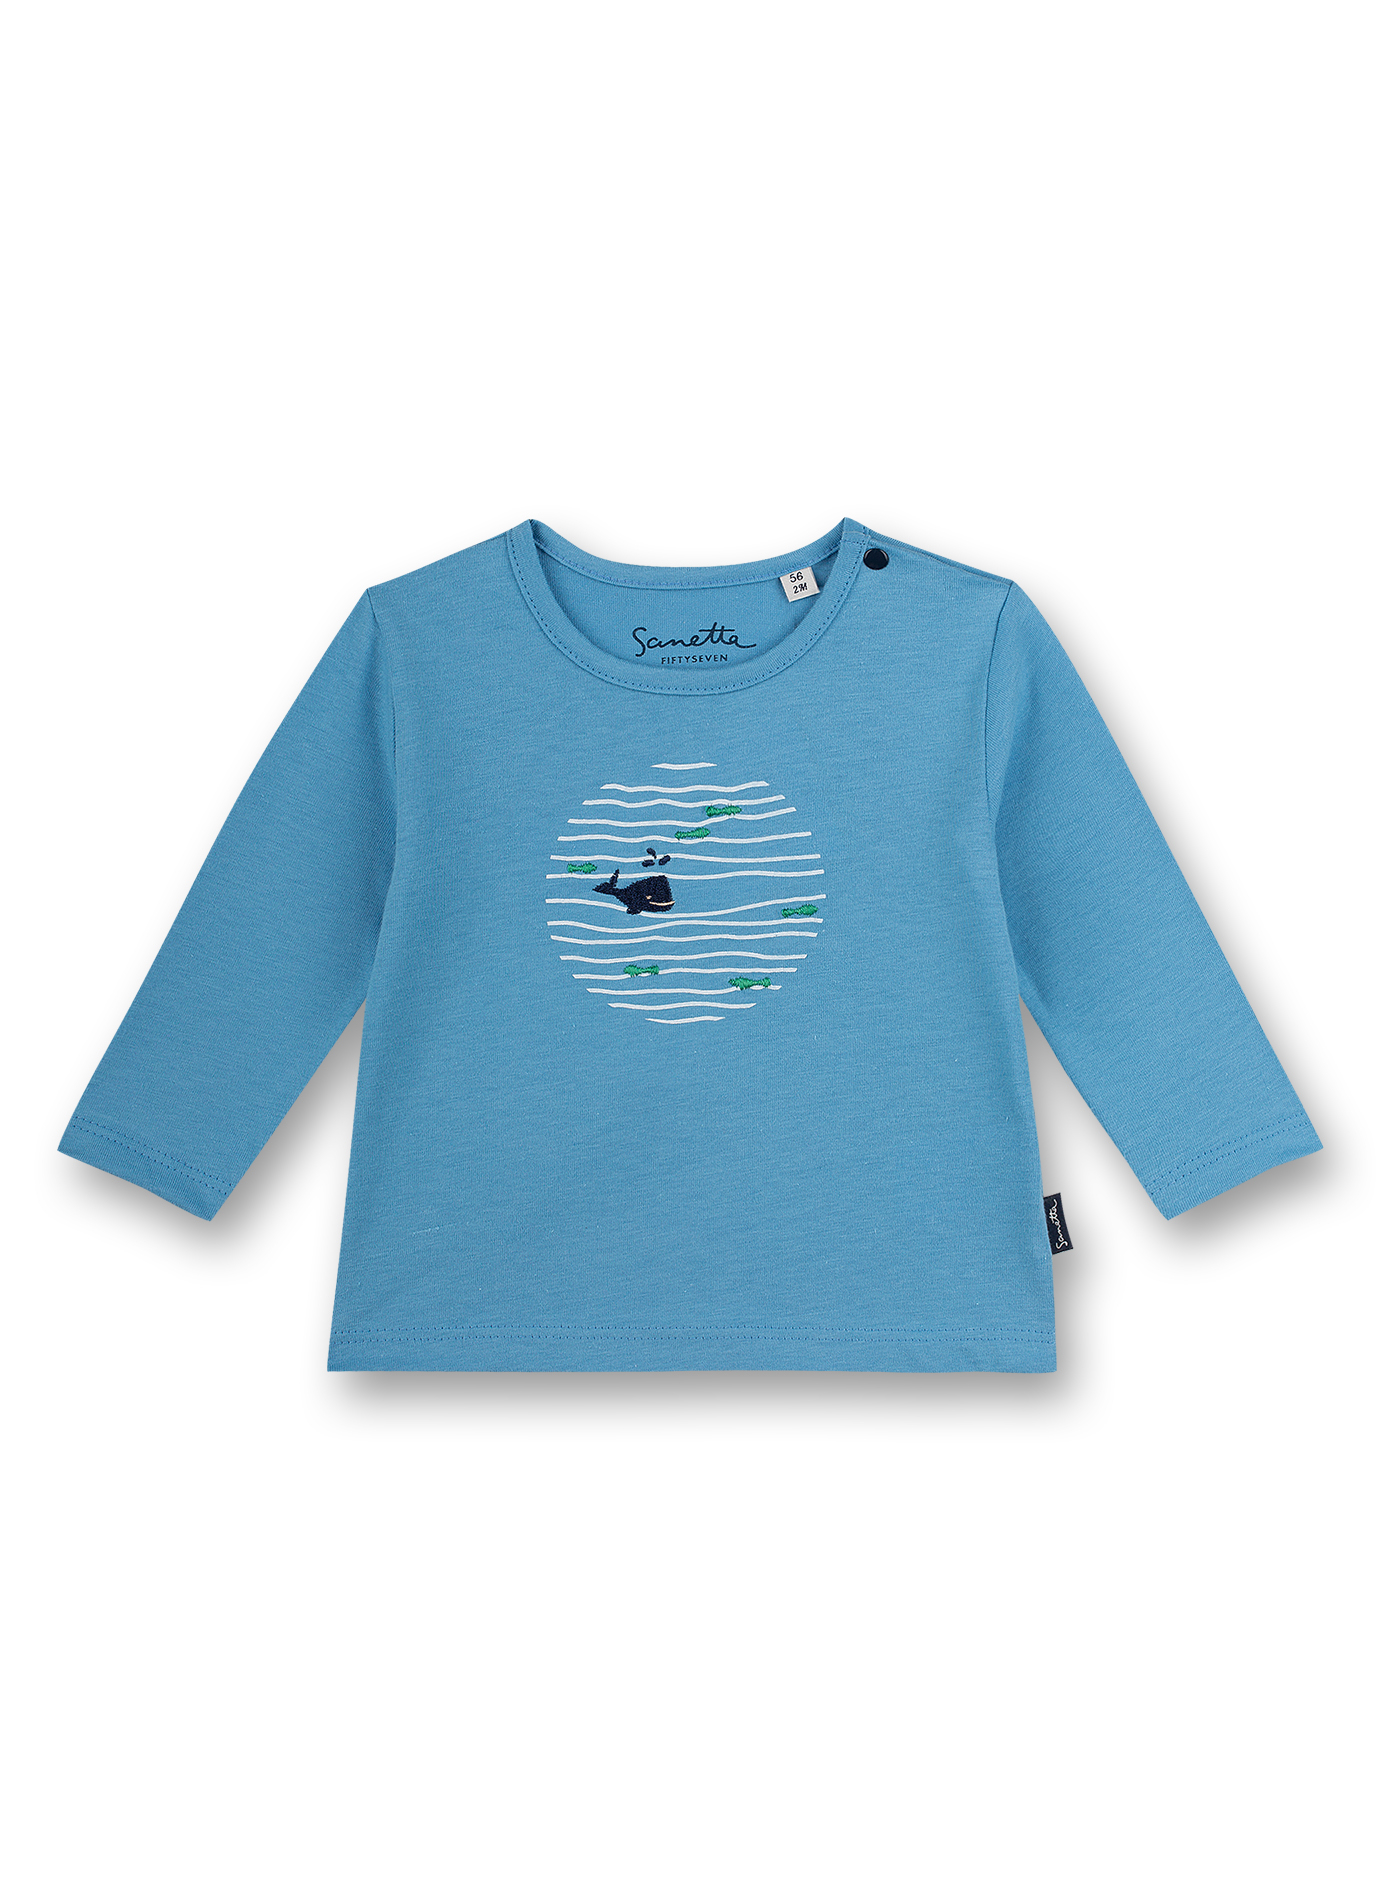 Jungen-Shirt langarm Hellblau Little Whale